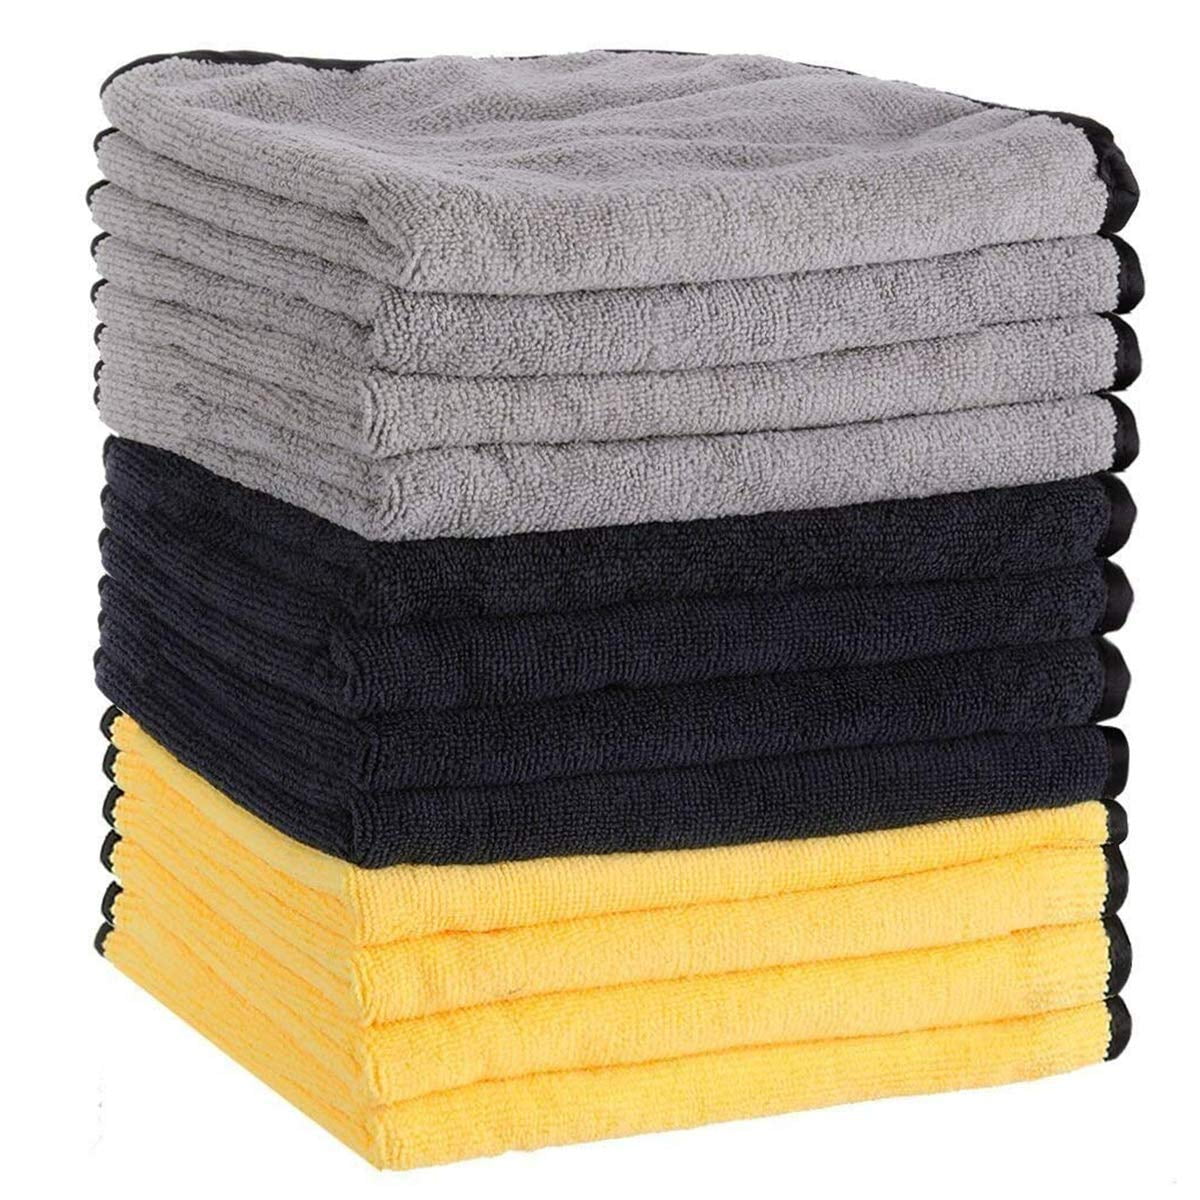 ULTRA MICROFIBER Towels 16"x12" 10 PACK Assorted colors 